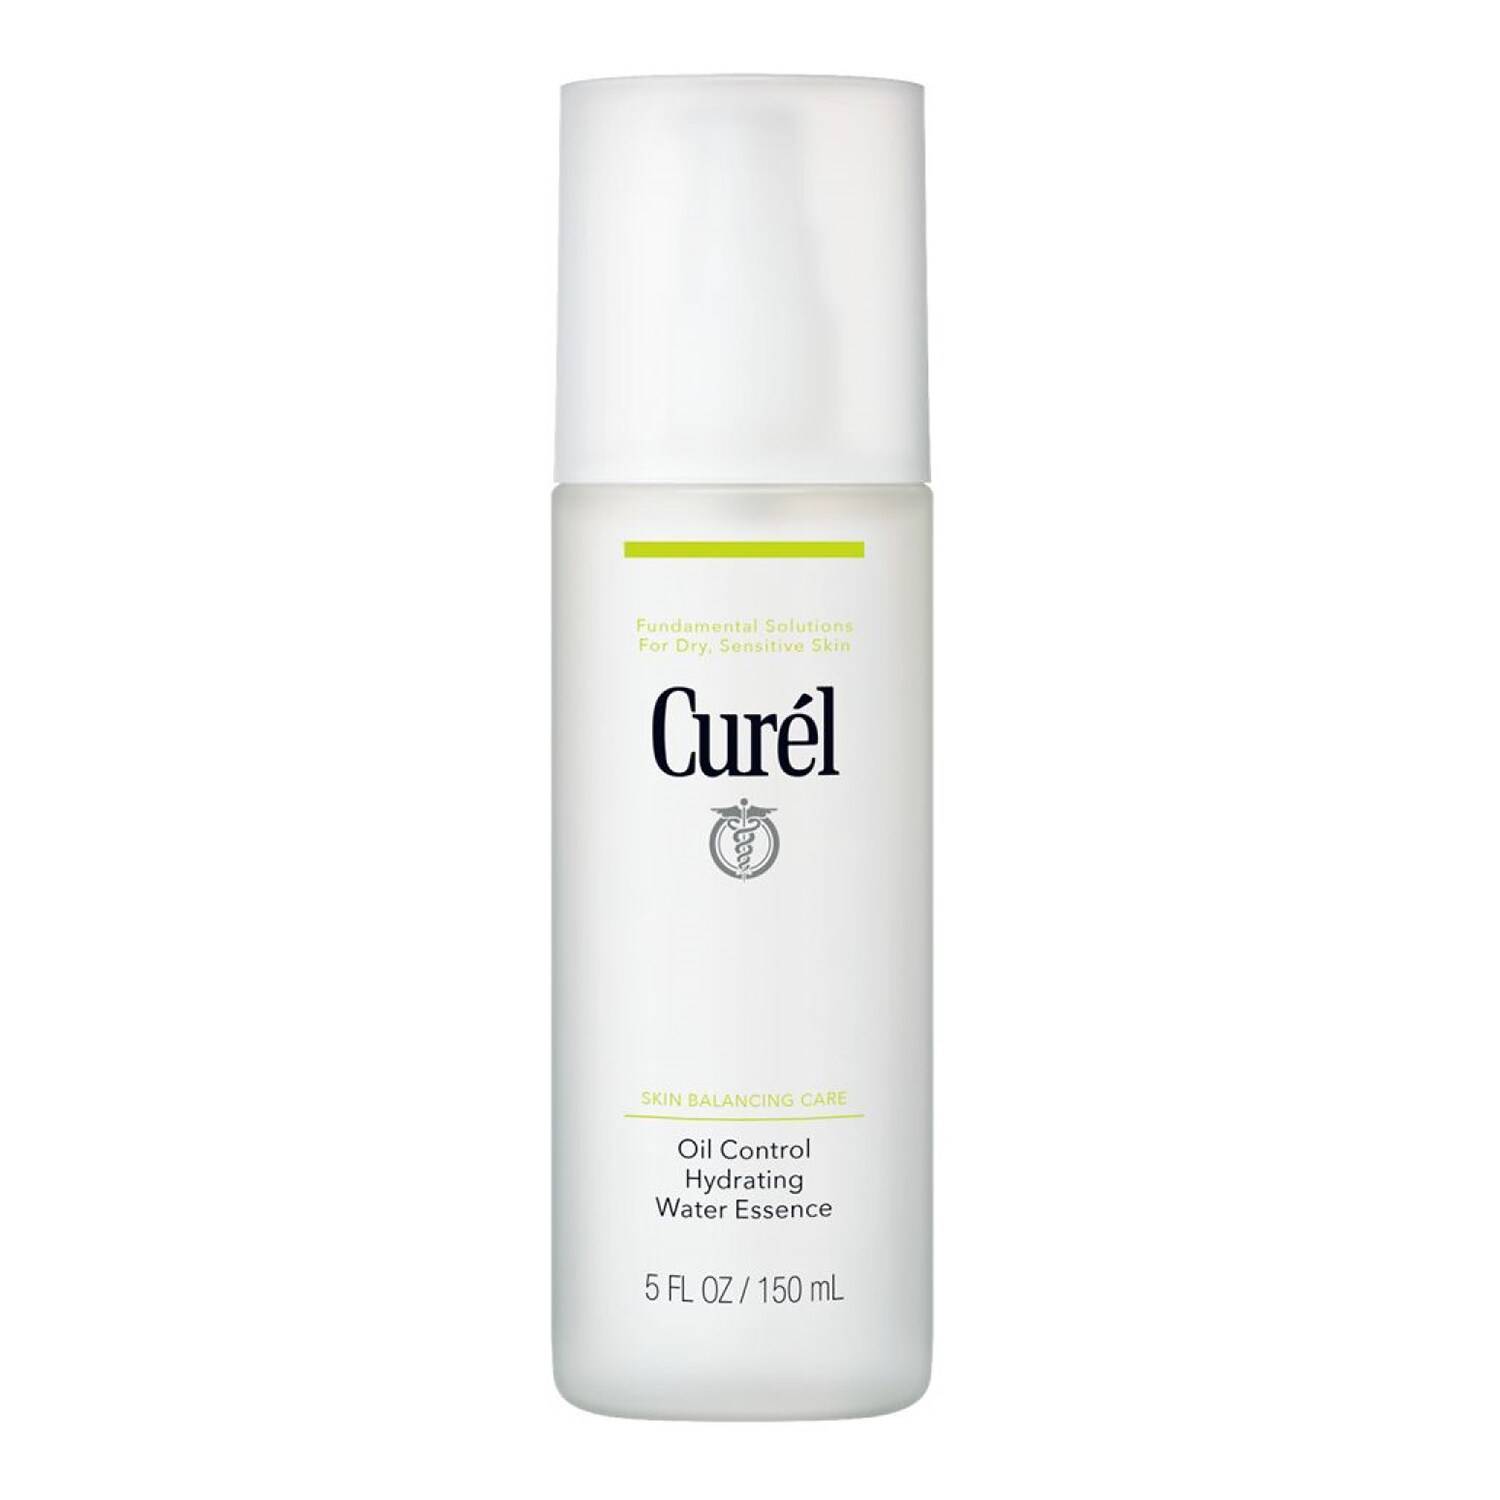 Curel Skin Balancing Care Oil Control Hydrating Water Essence 150Ml